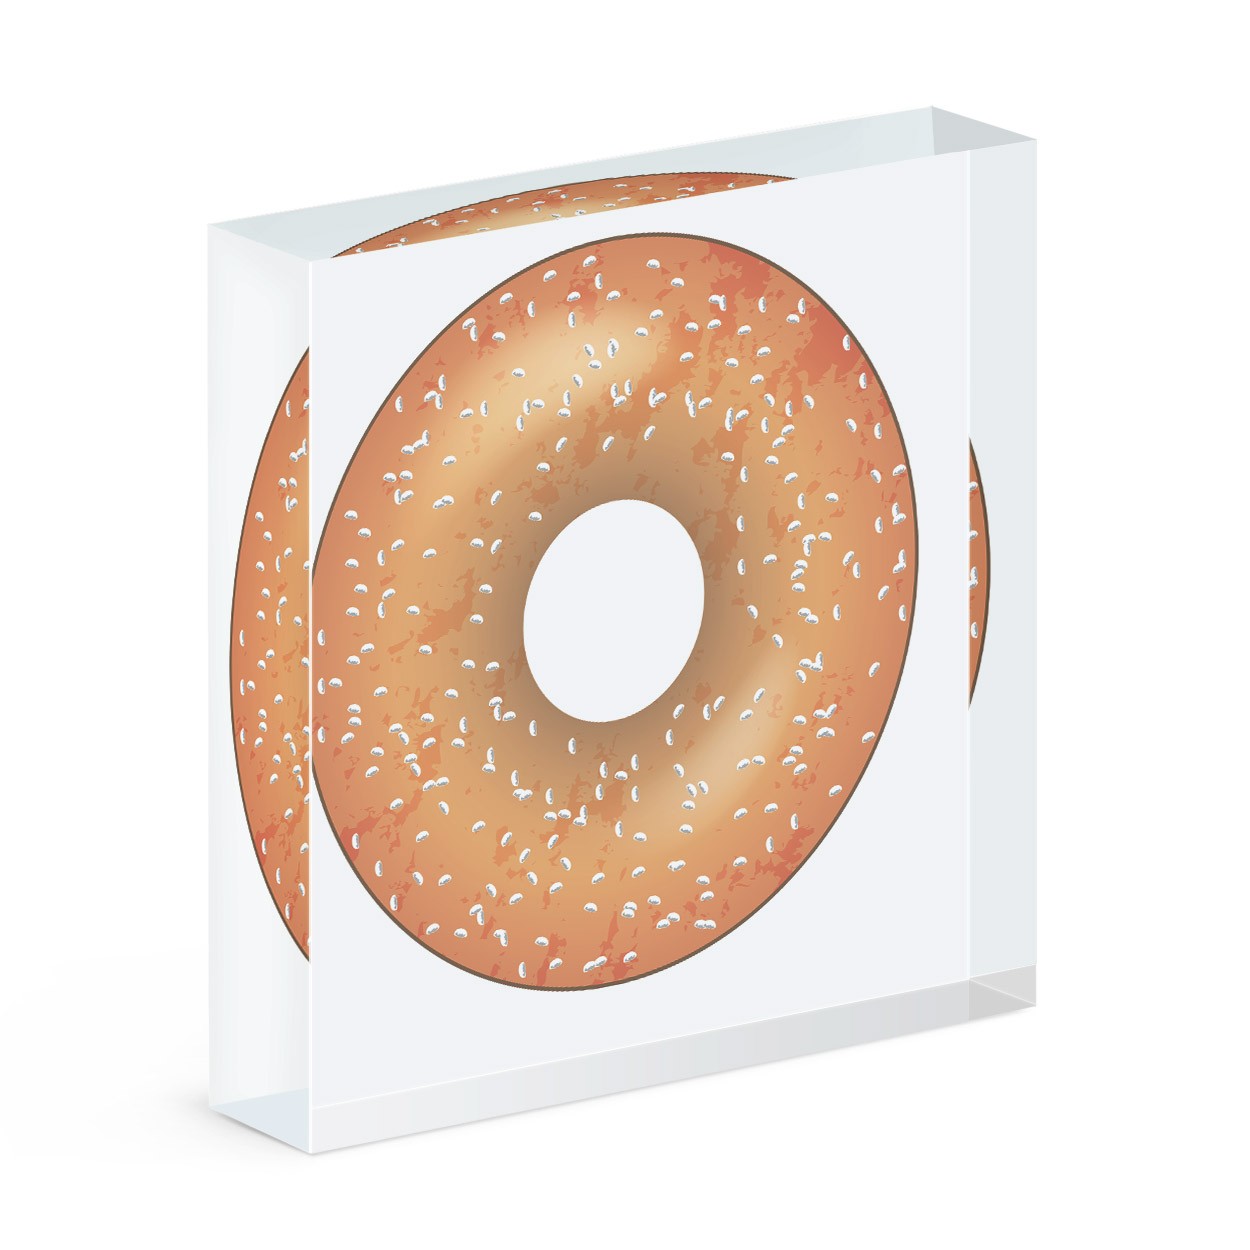 Sprinkled Glazed Doughnut Donut Acrylic Block